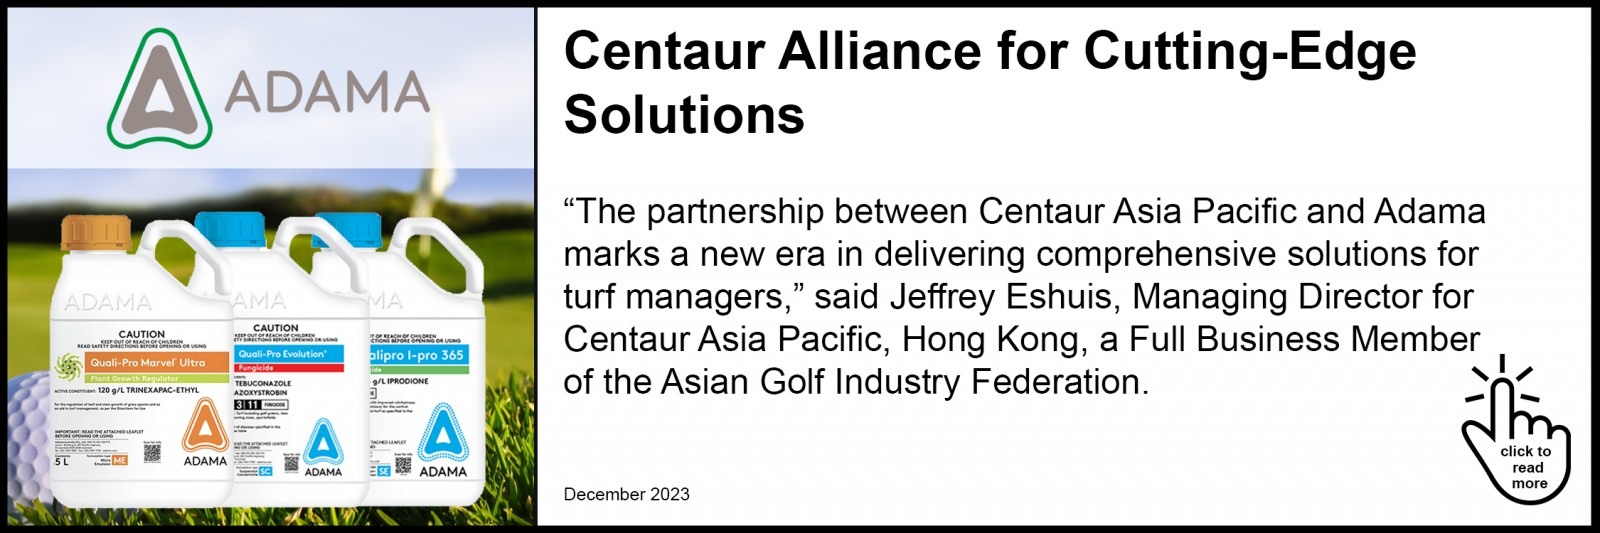 Adama Centaur Alliance for Cutting-Edge Solutions